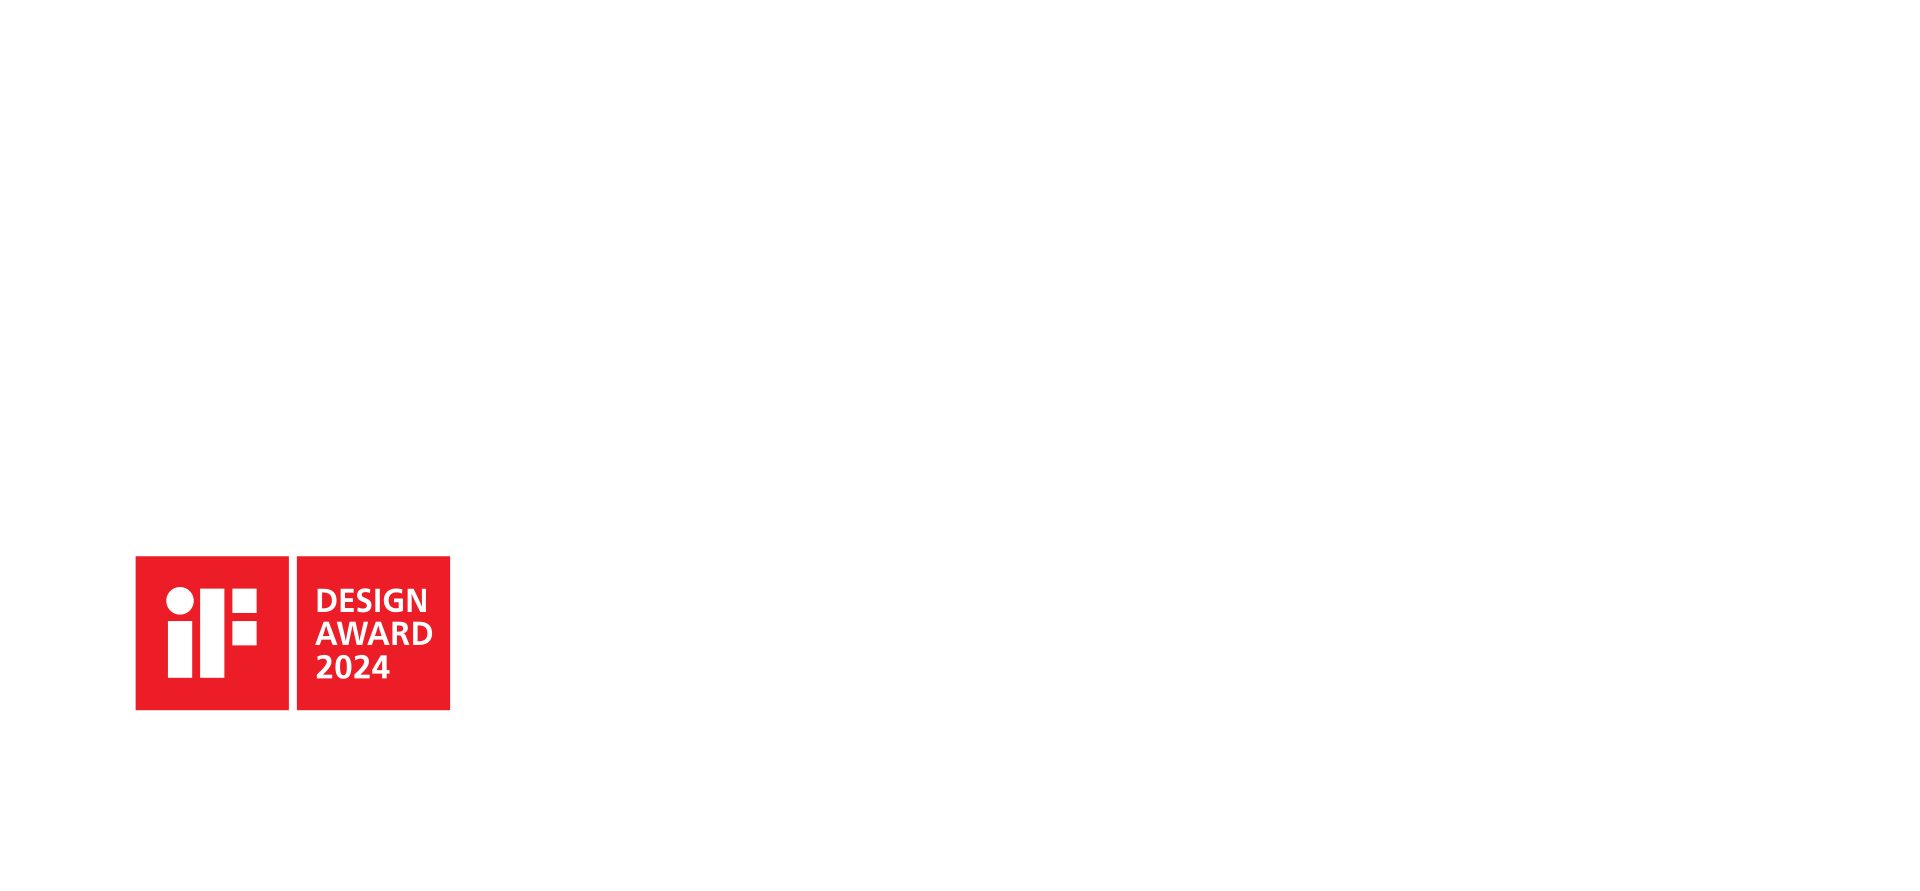 Clarii mini iF Design Award